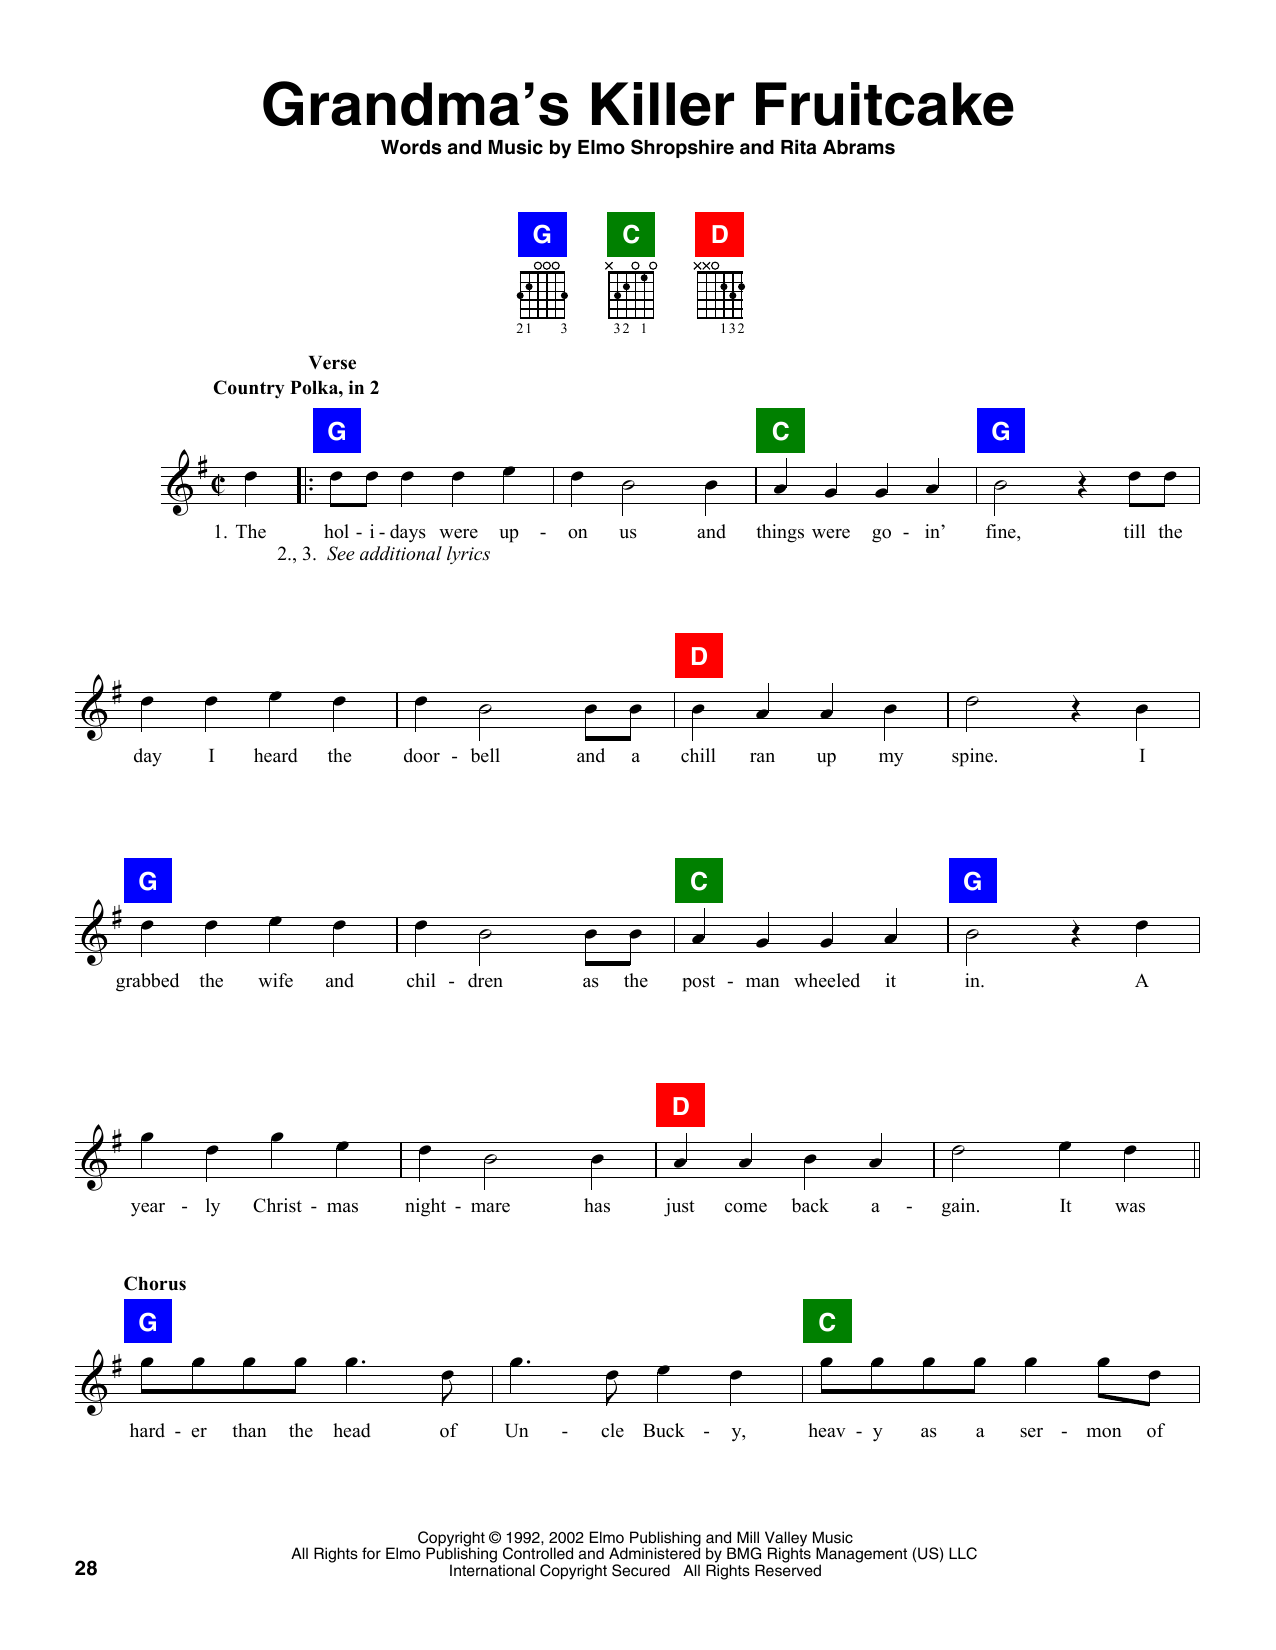 Download Elmo Shropshire Grandma's Killer Fruitcake Sheet Music and learn how to play Alto Saxophone PDF digital score in minutes